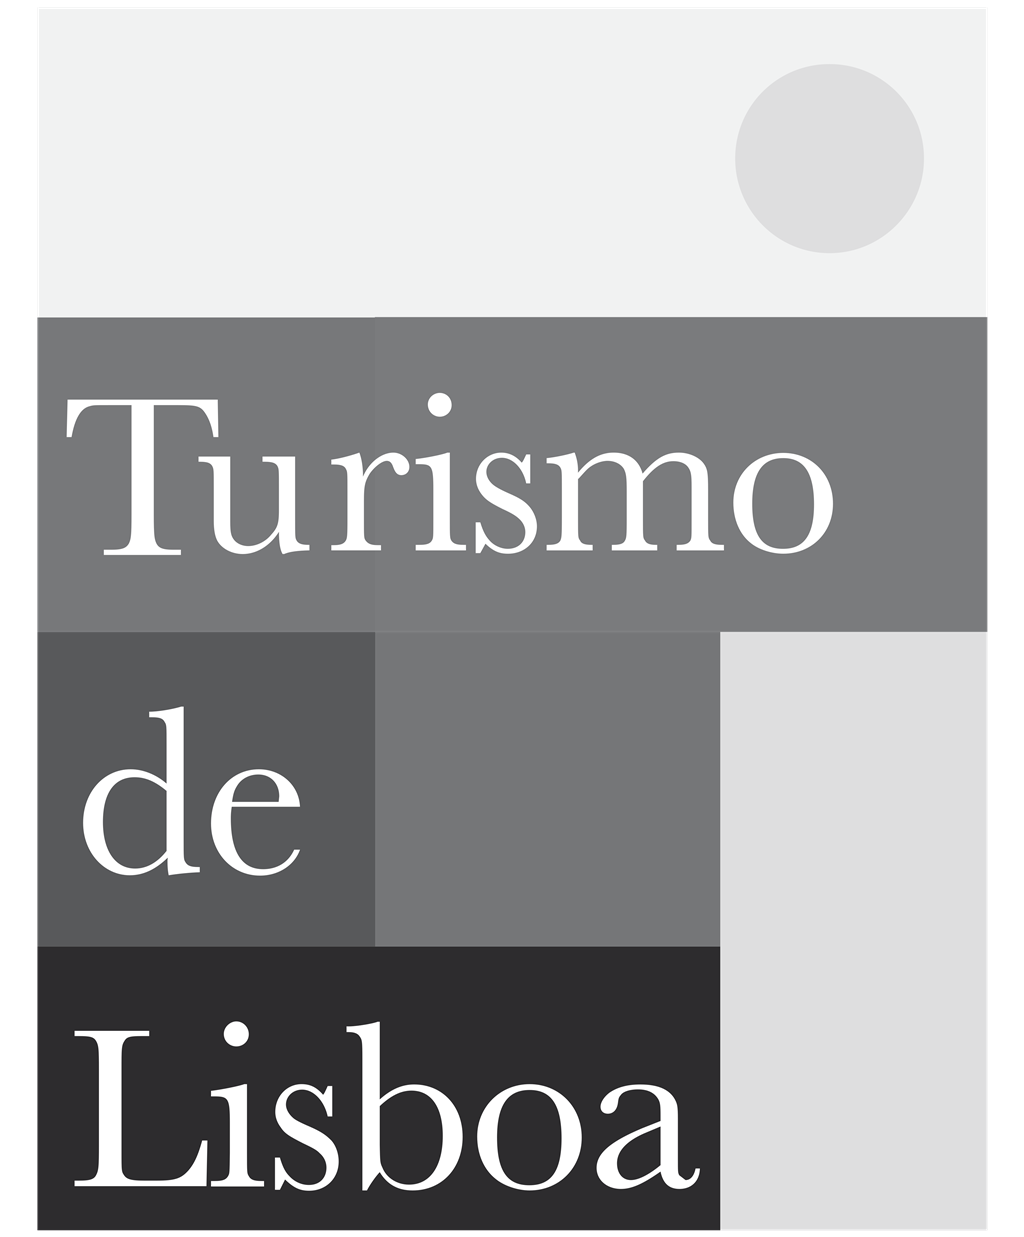 Turismo de Lisboa logotype, transparent .png, medium, large